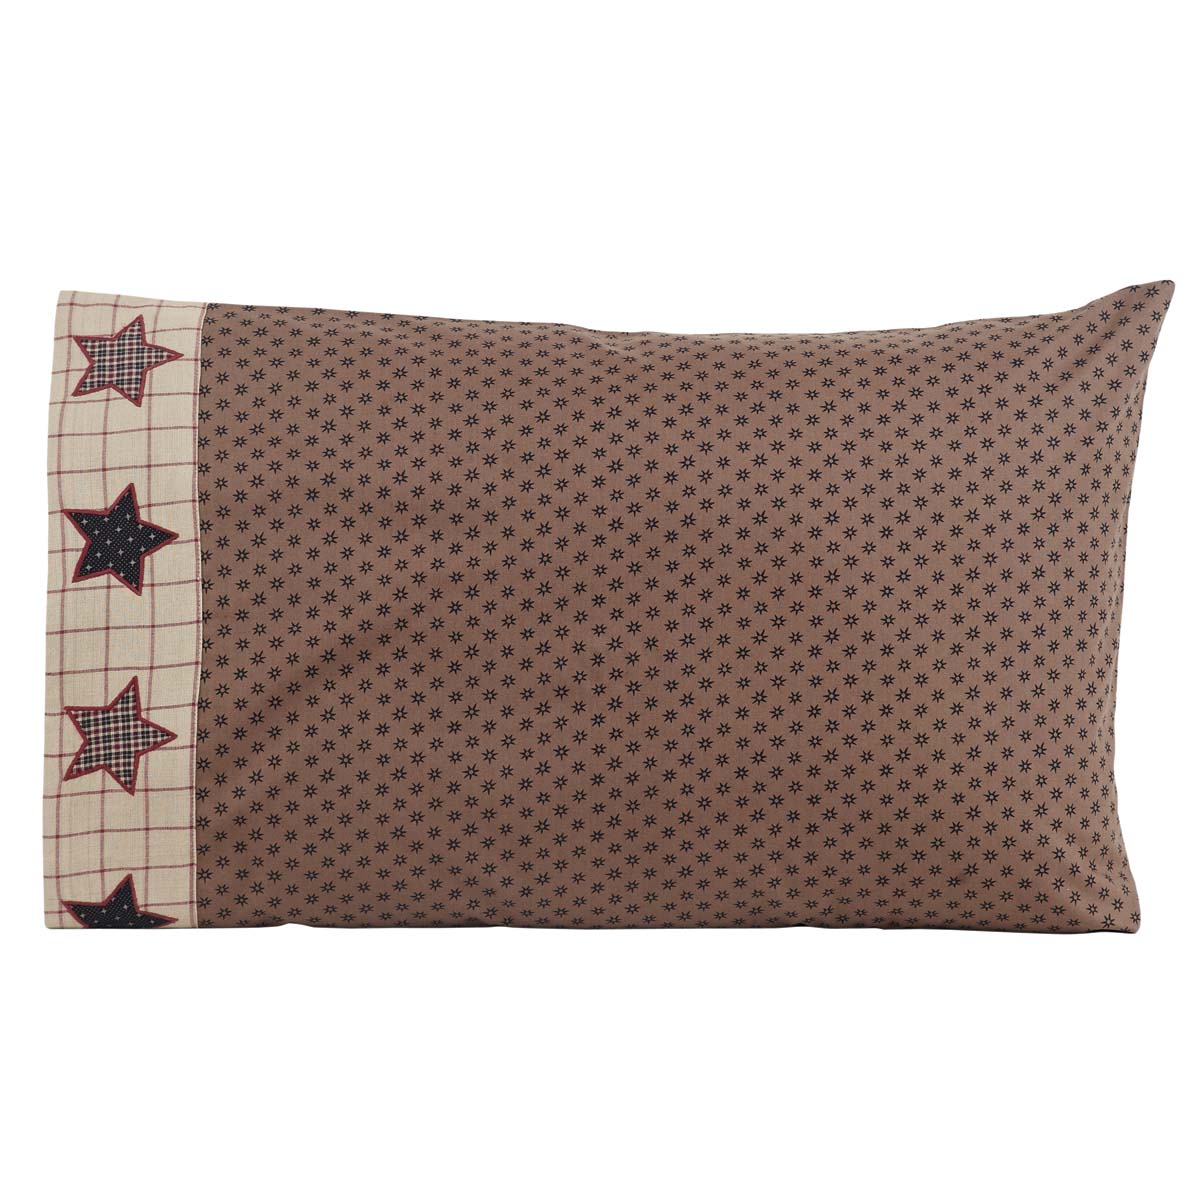 Mayflower Market Bingham Star Standard Pillow Case Set of 2 21x30 By VHC Brands